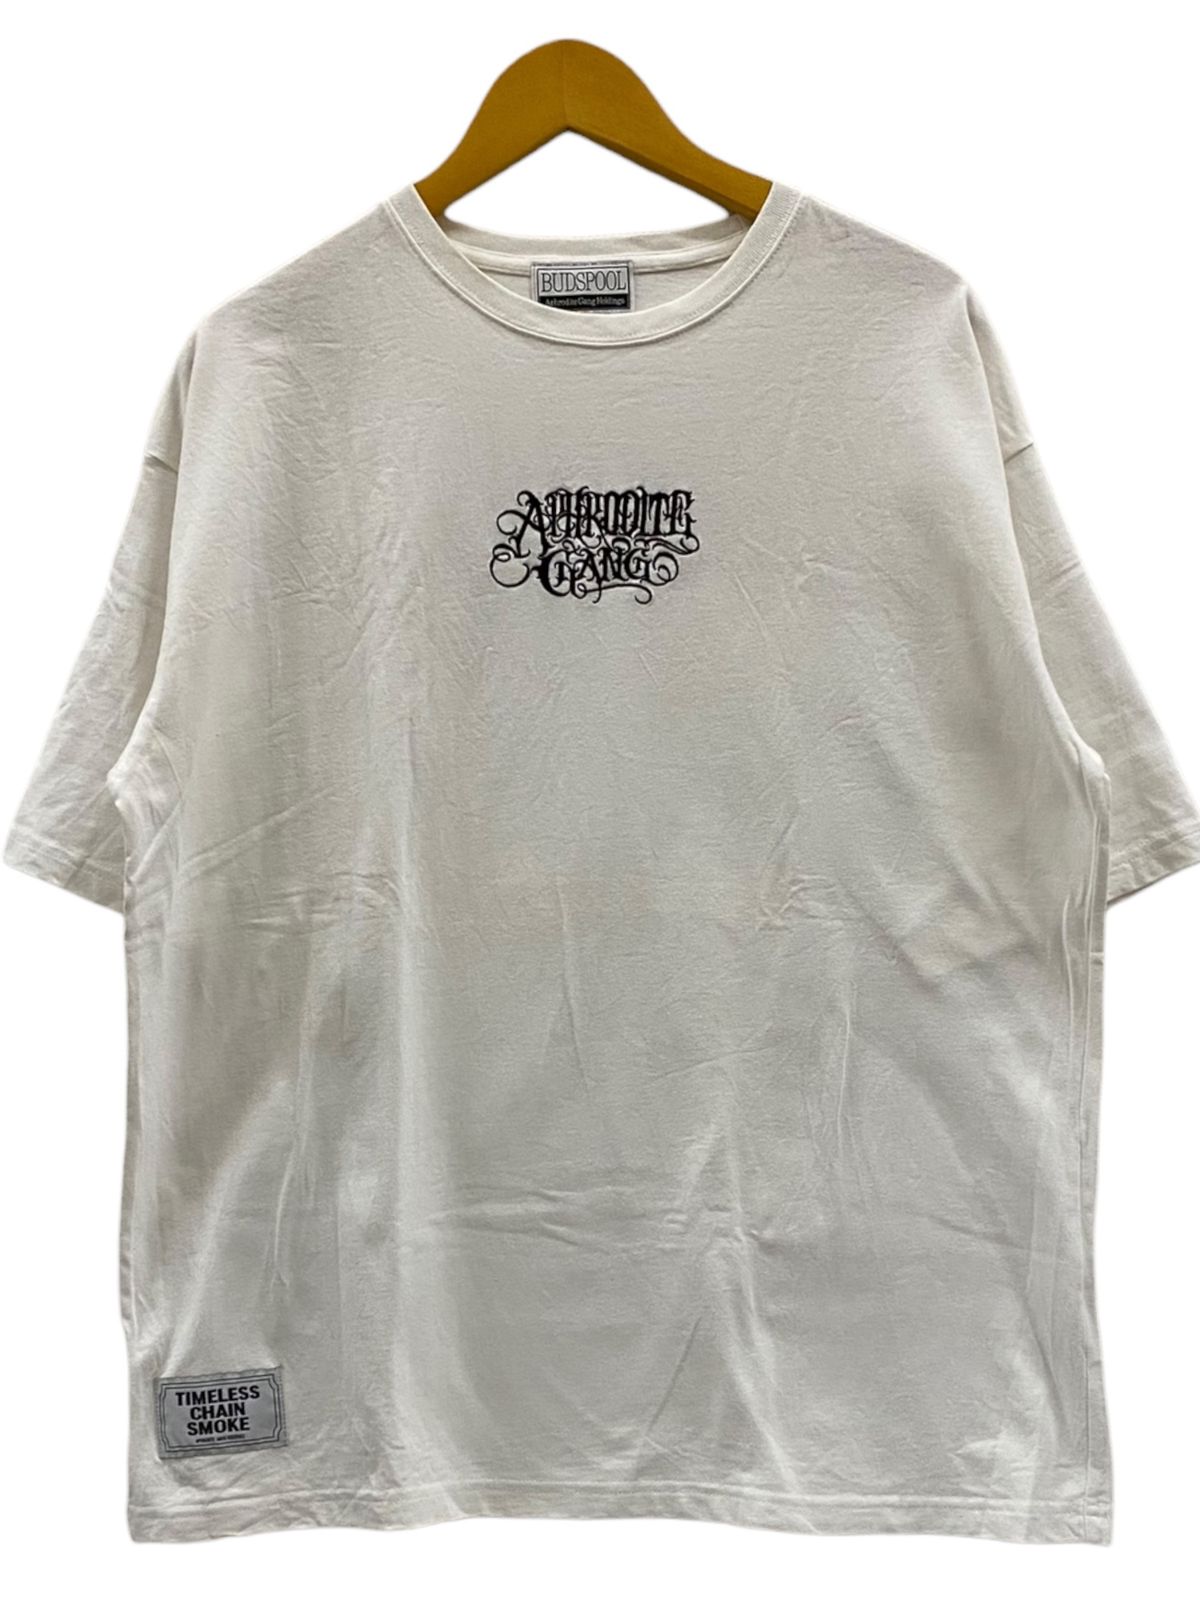 BUDSPOOL(バッズプール) APHRODITE GANG Tシャツ 刺繍 半袖 L ホワイト 